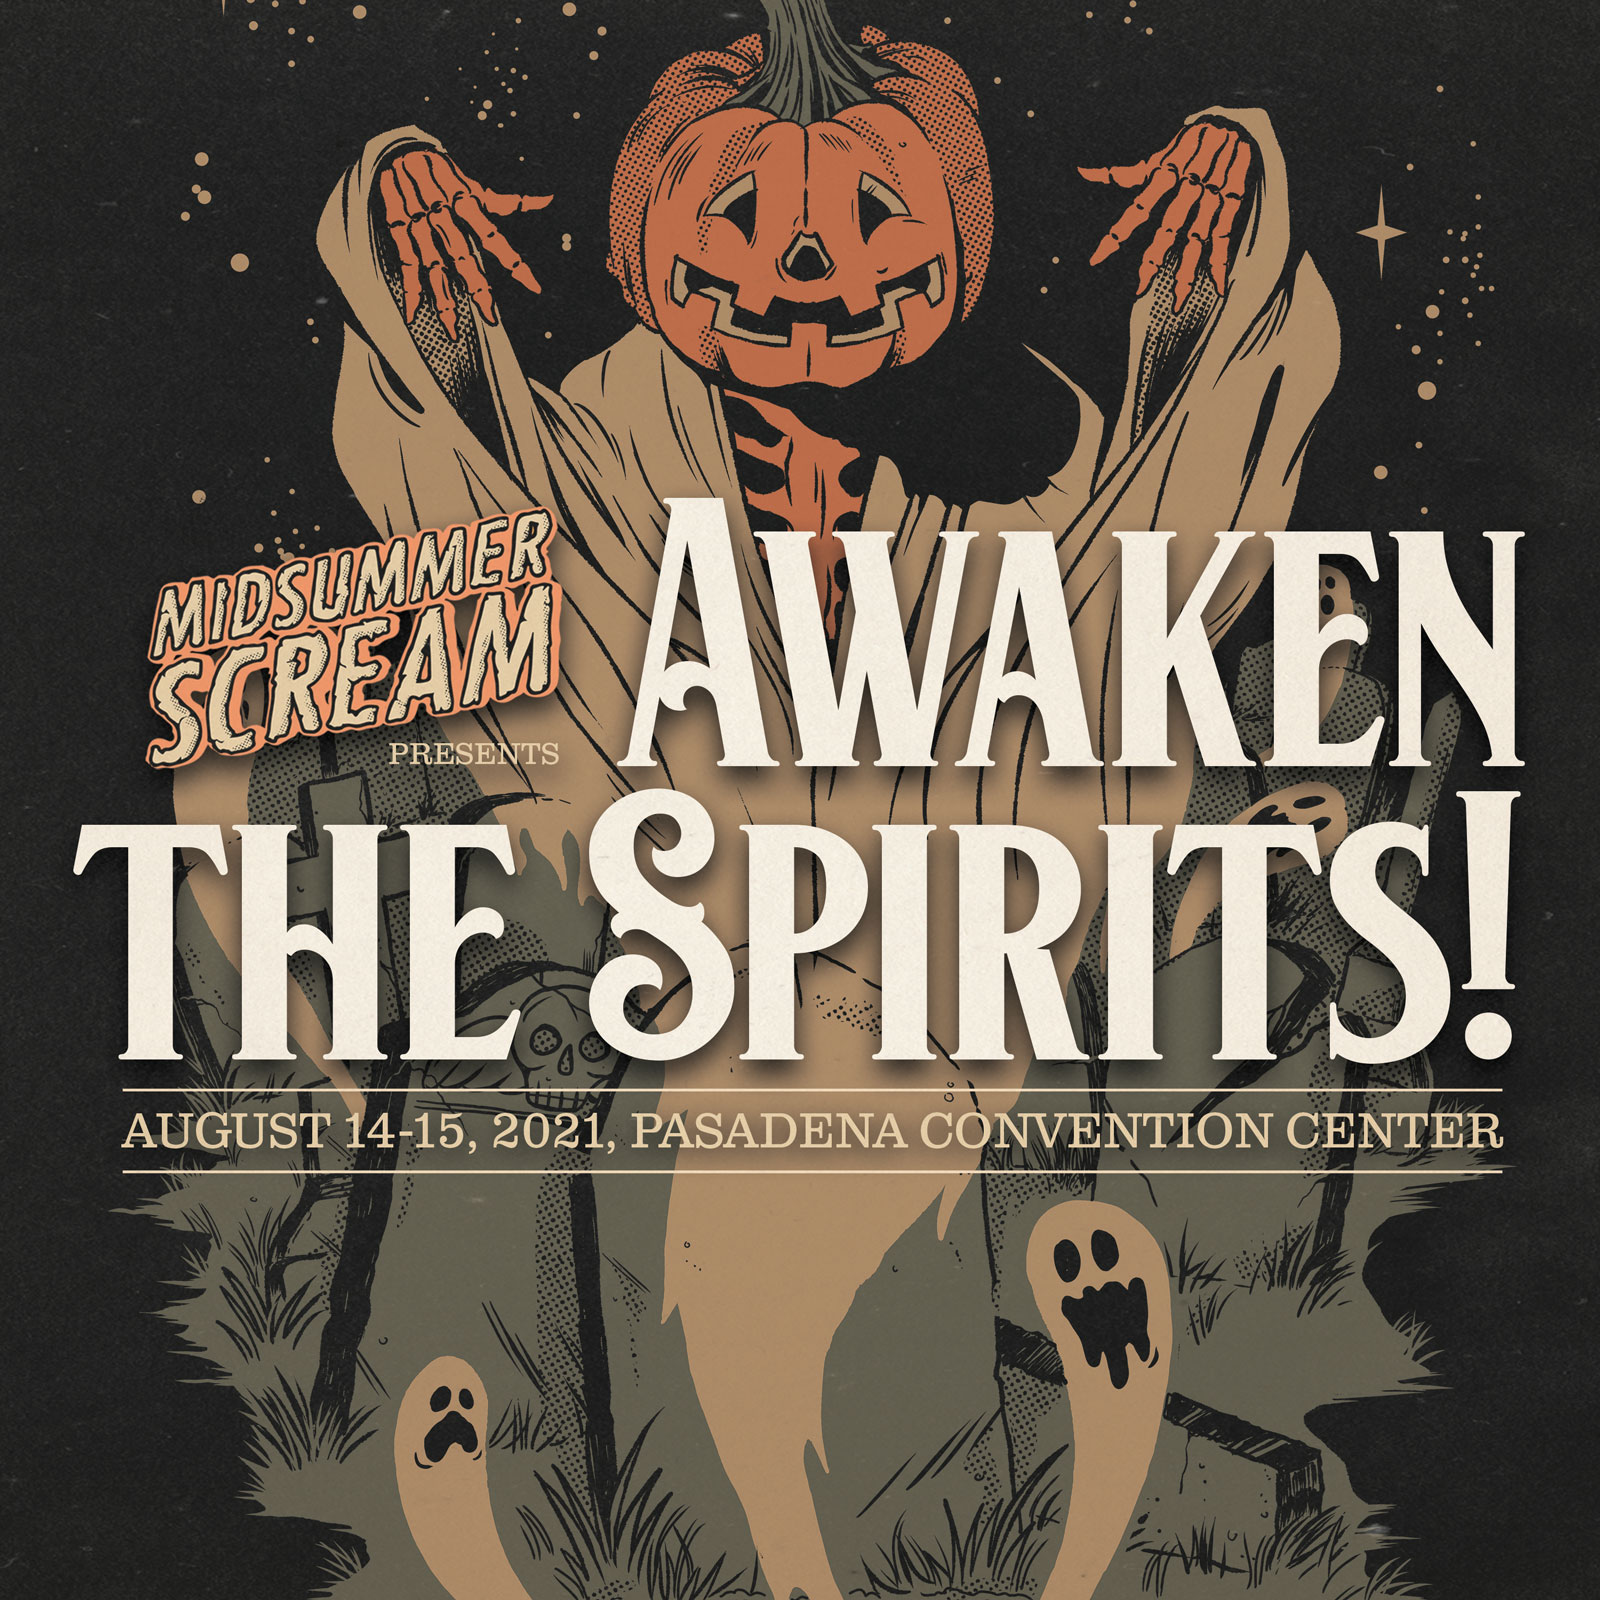 Awaken the Spirits!